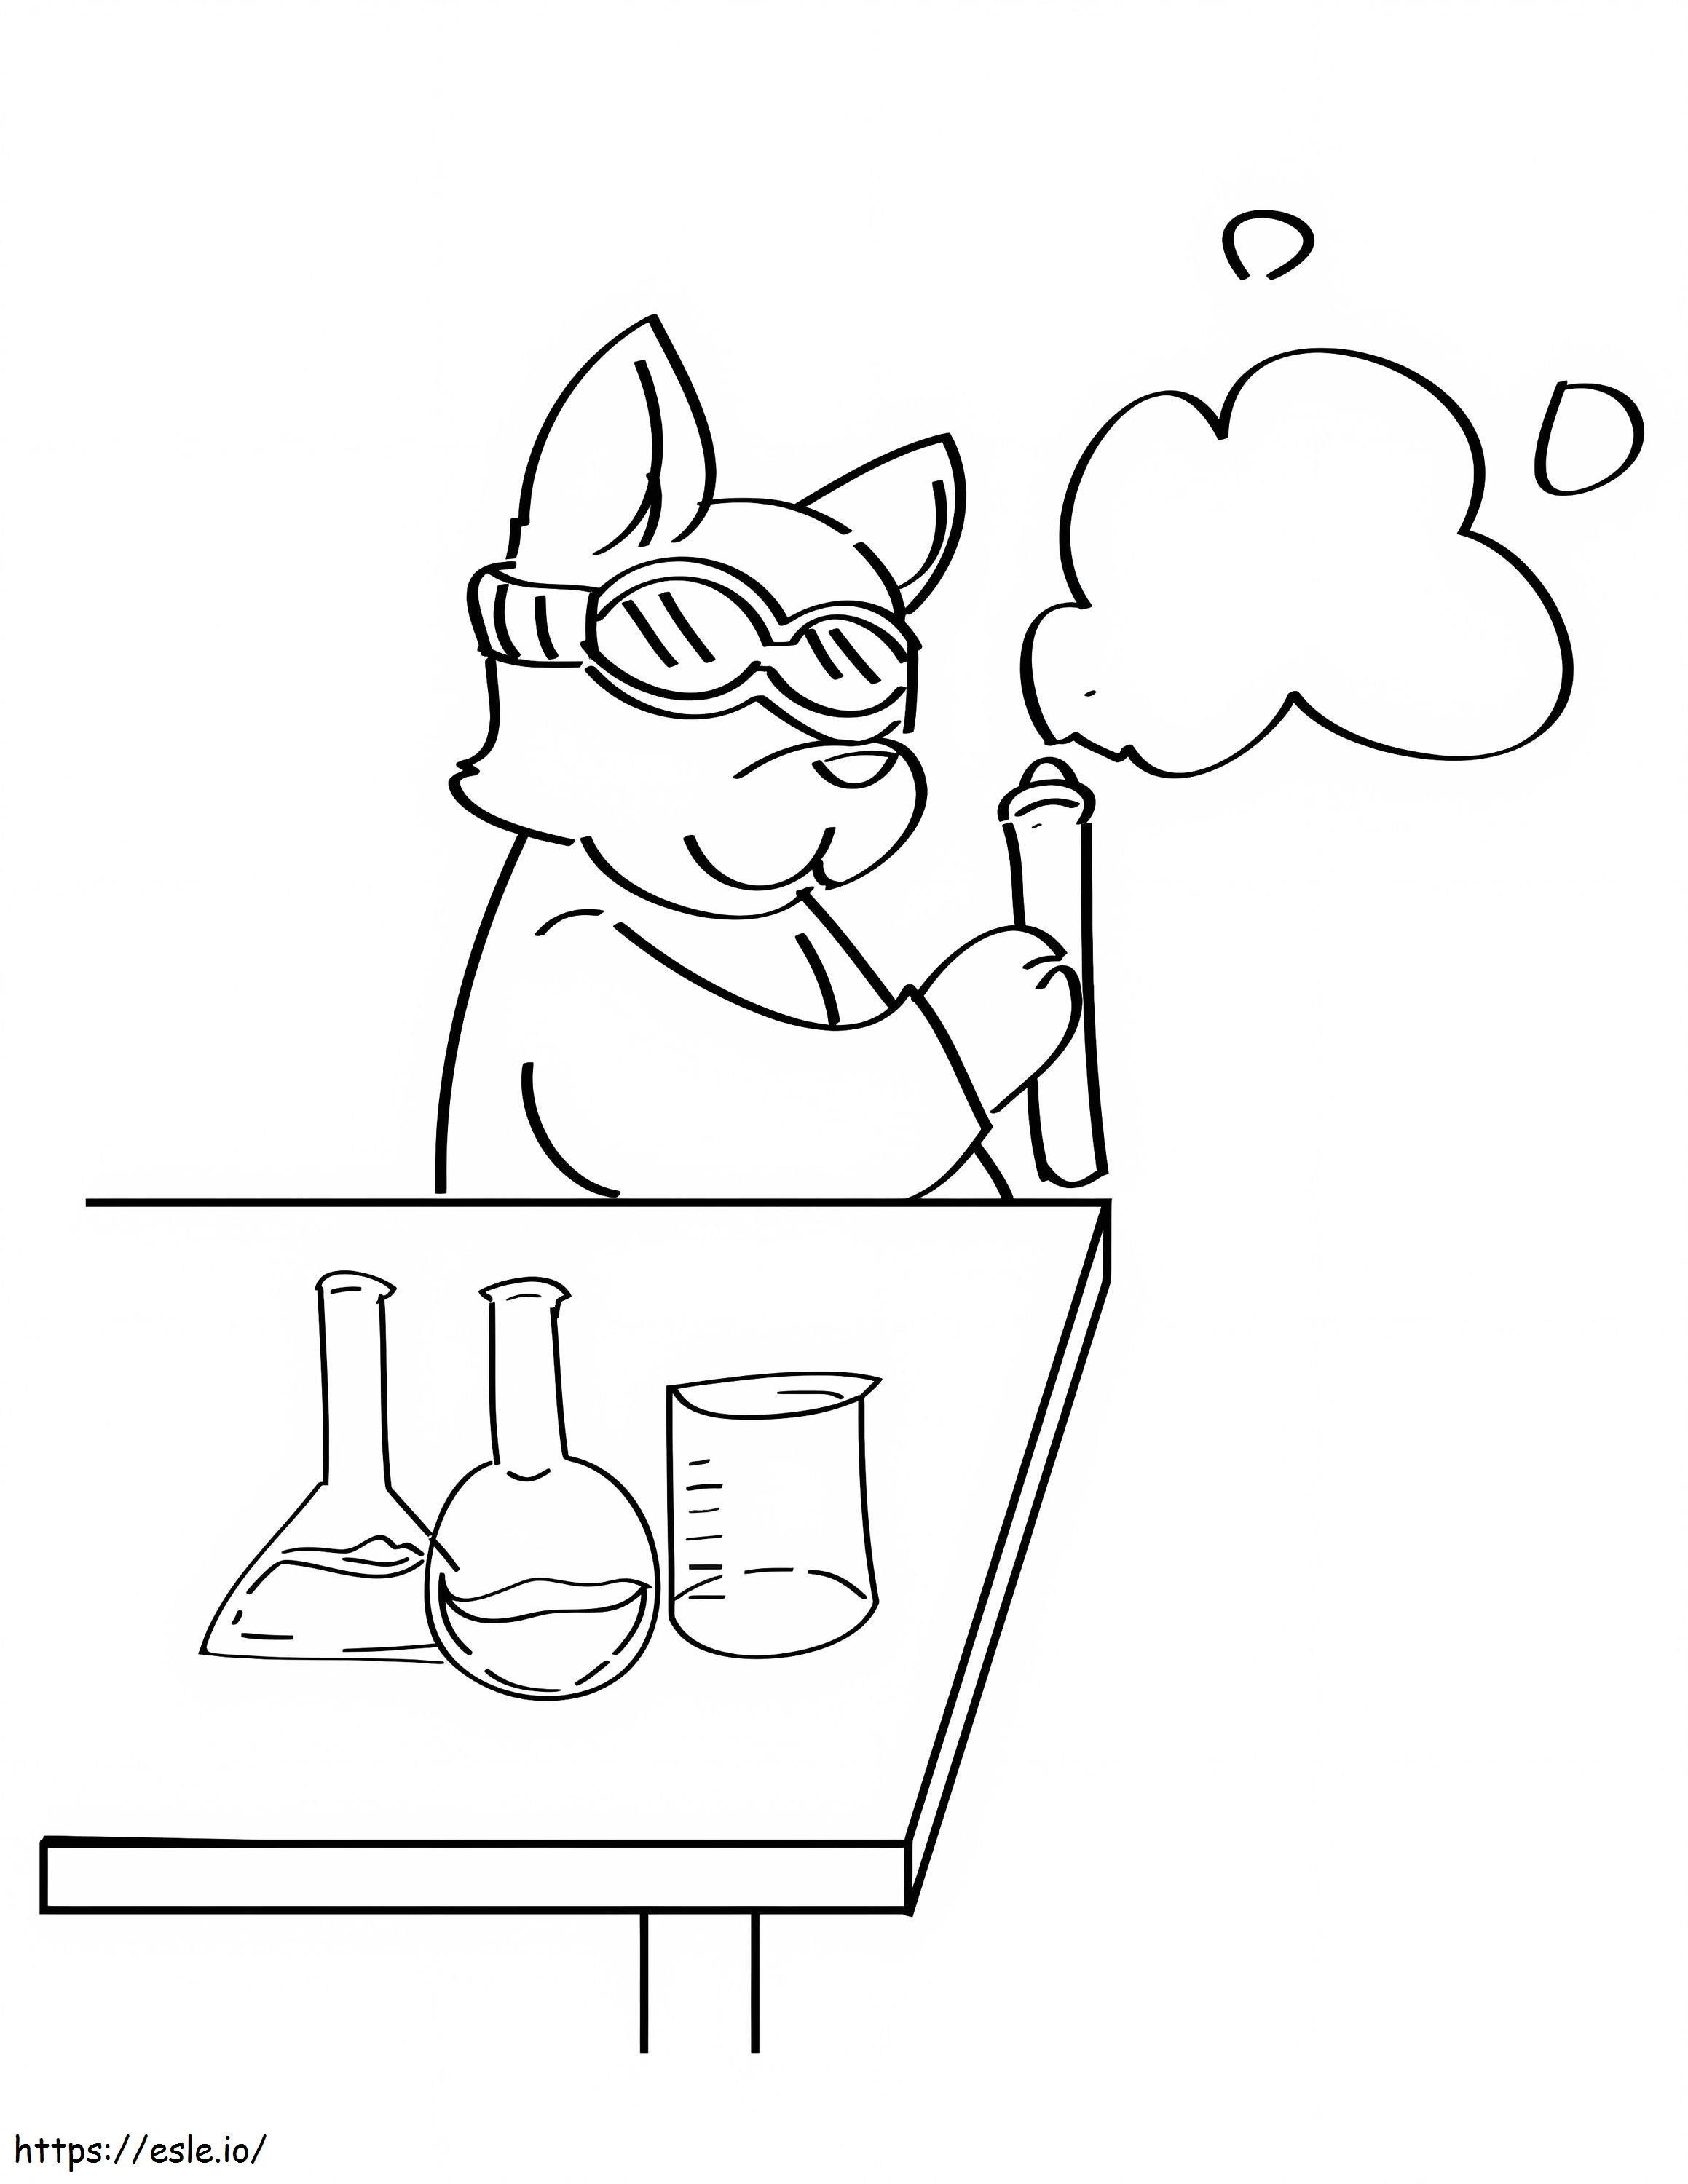 Naukowy kot kolorowanka